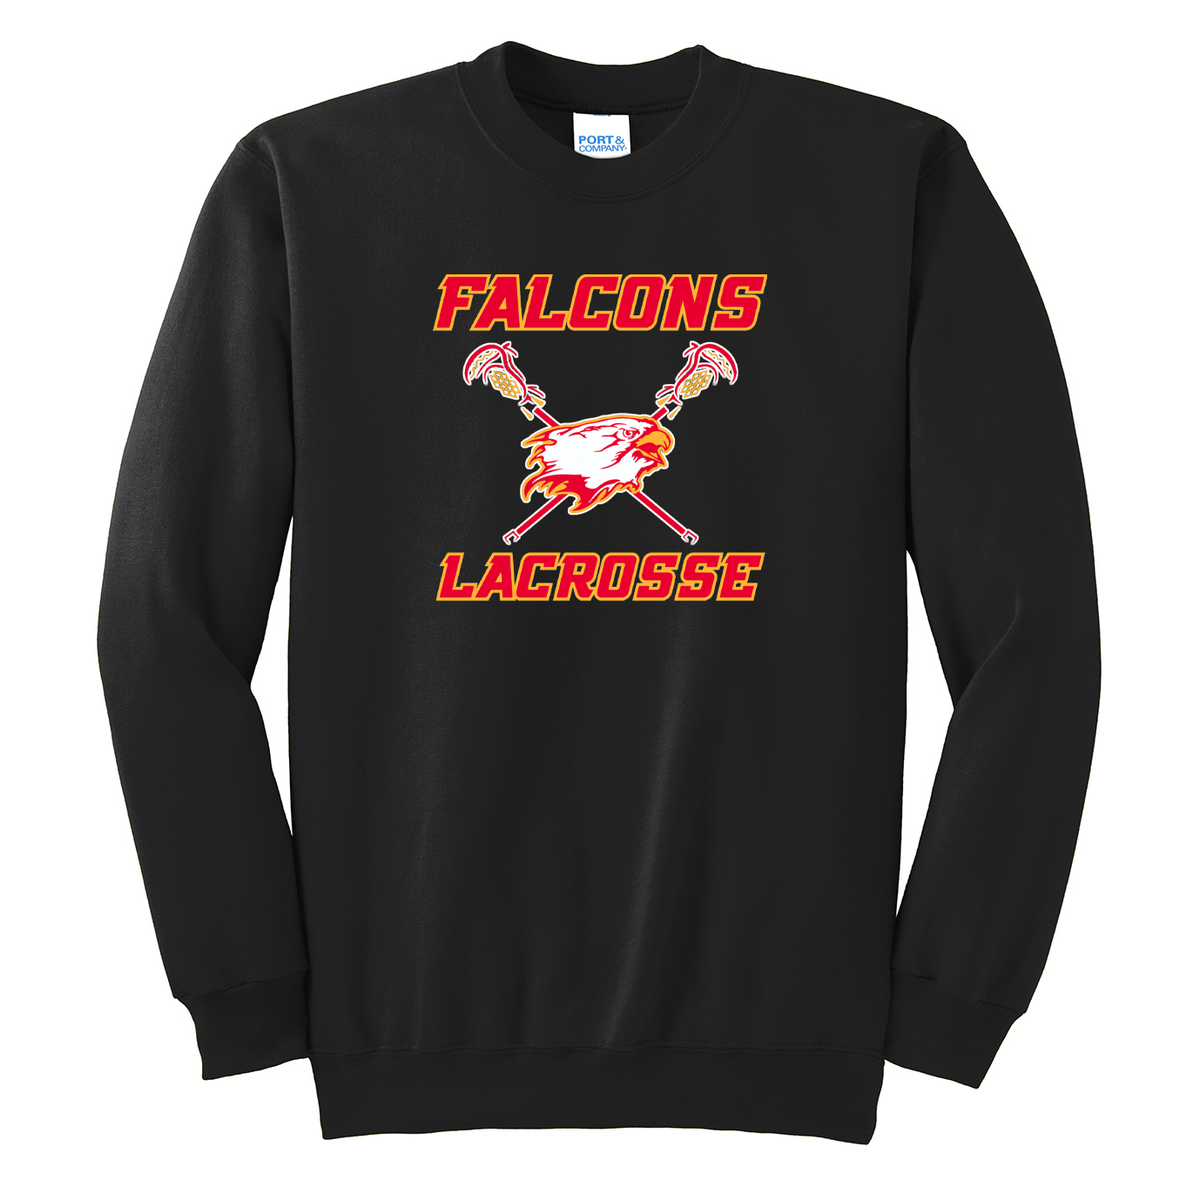 Falcons Lacrosse Club Crew Neck Sweater